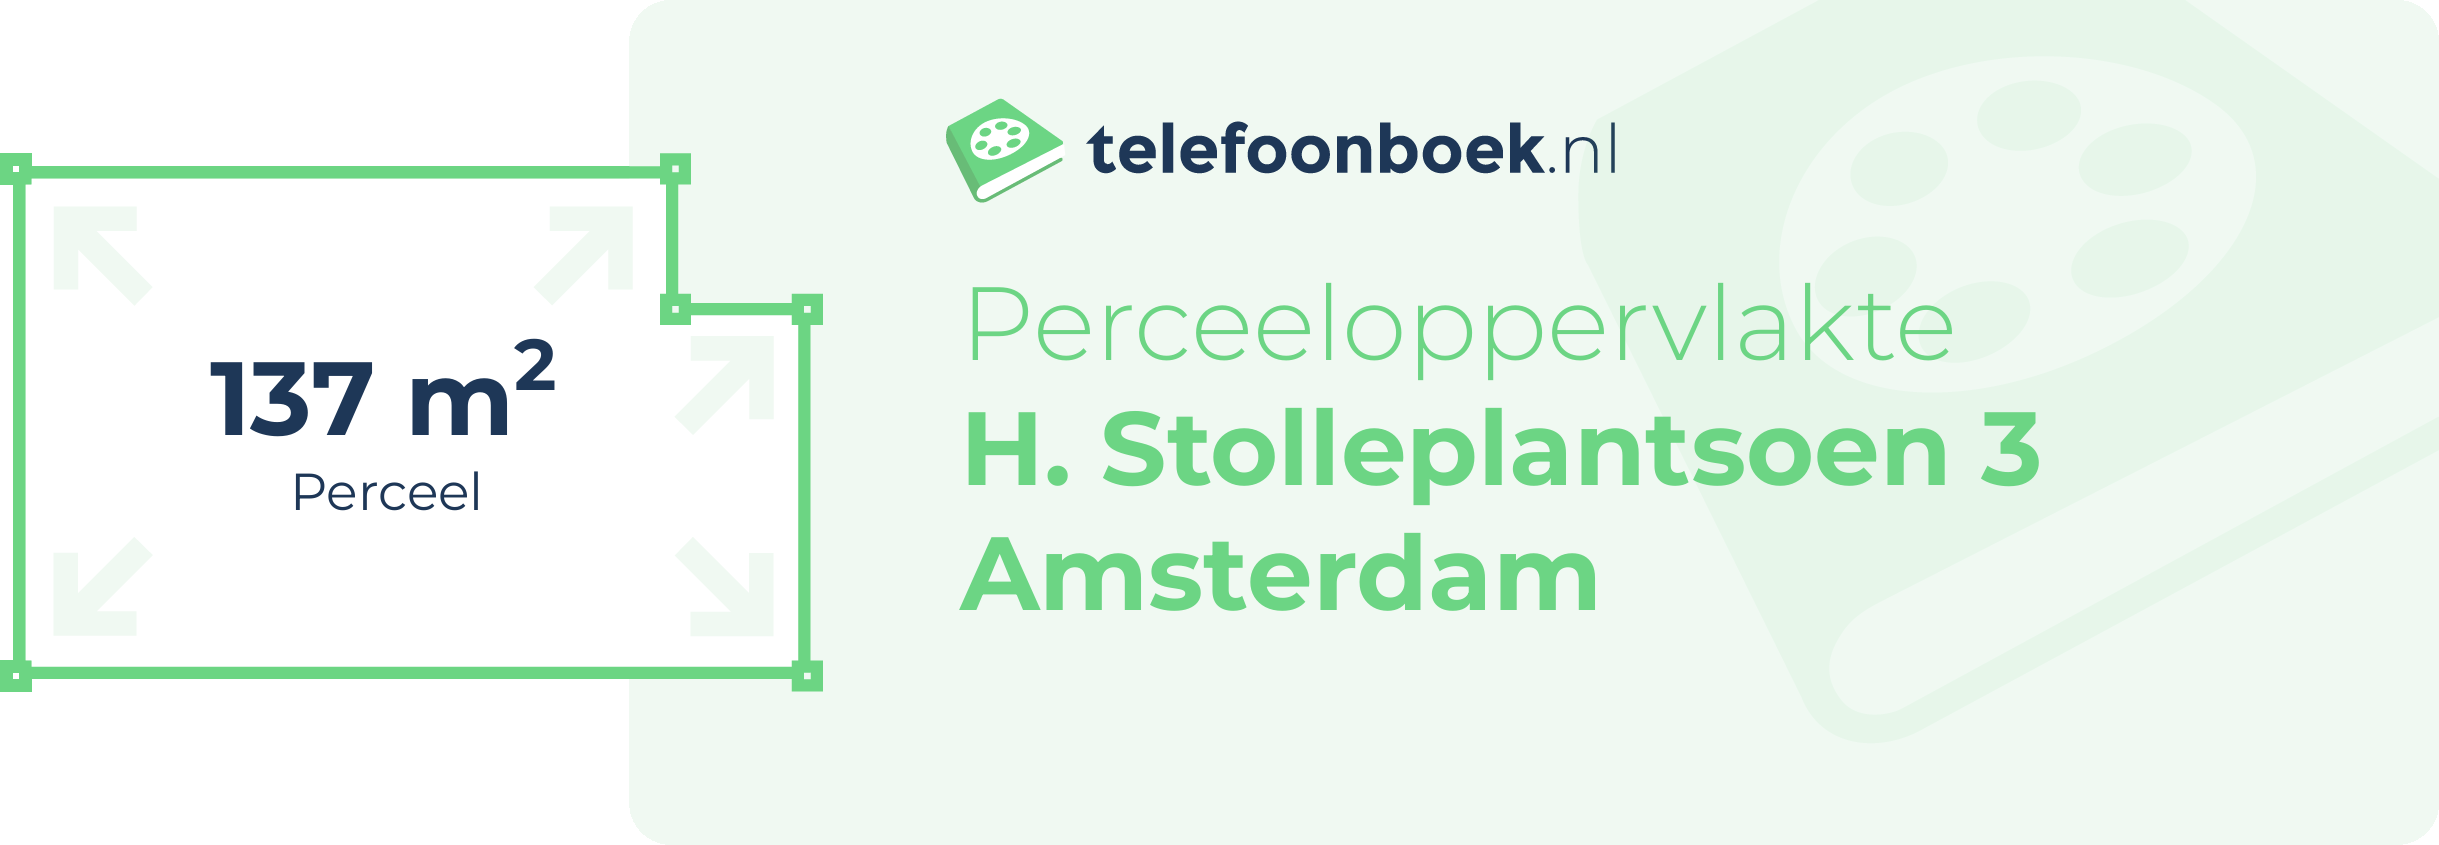 Perceeloppervlakte H. Stolleplantsoen 3 Amsterdam